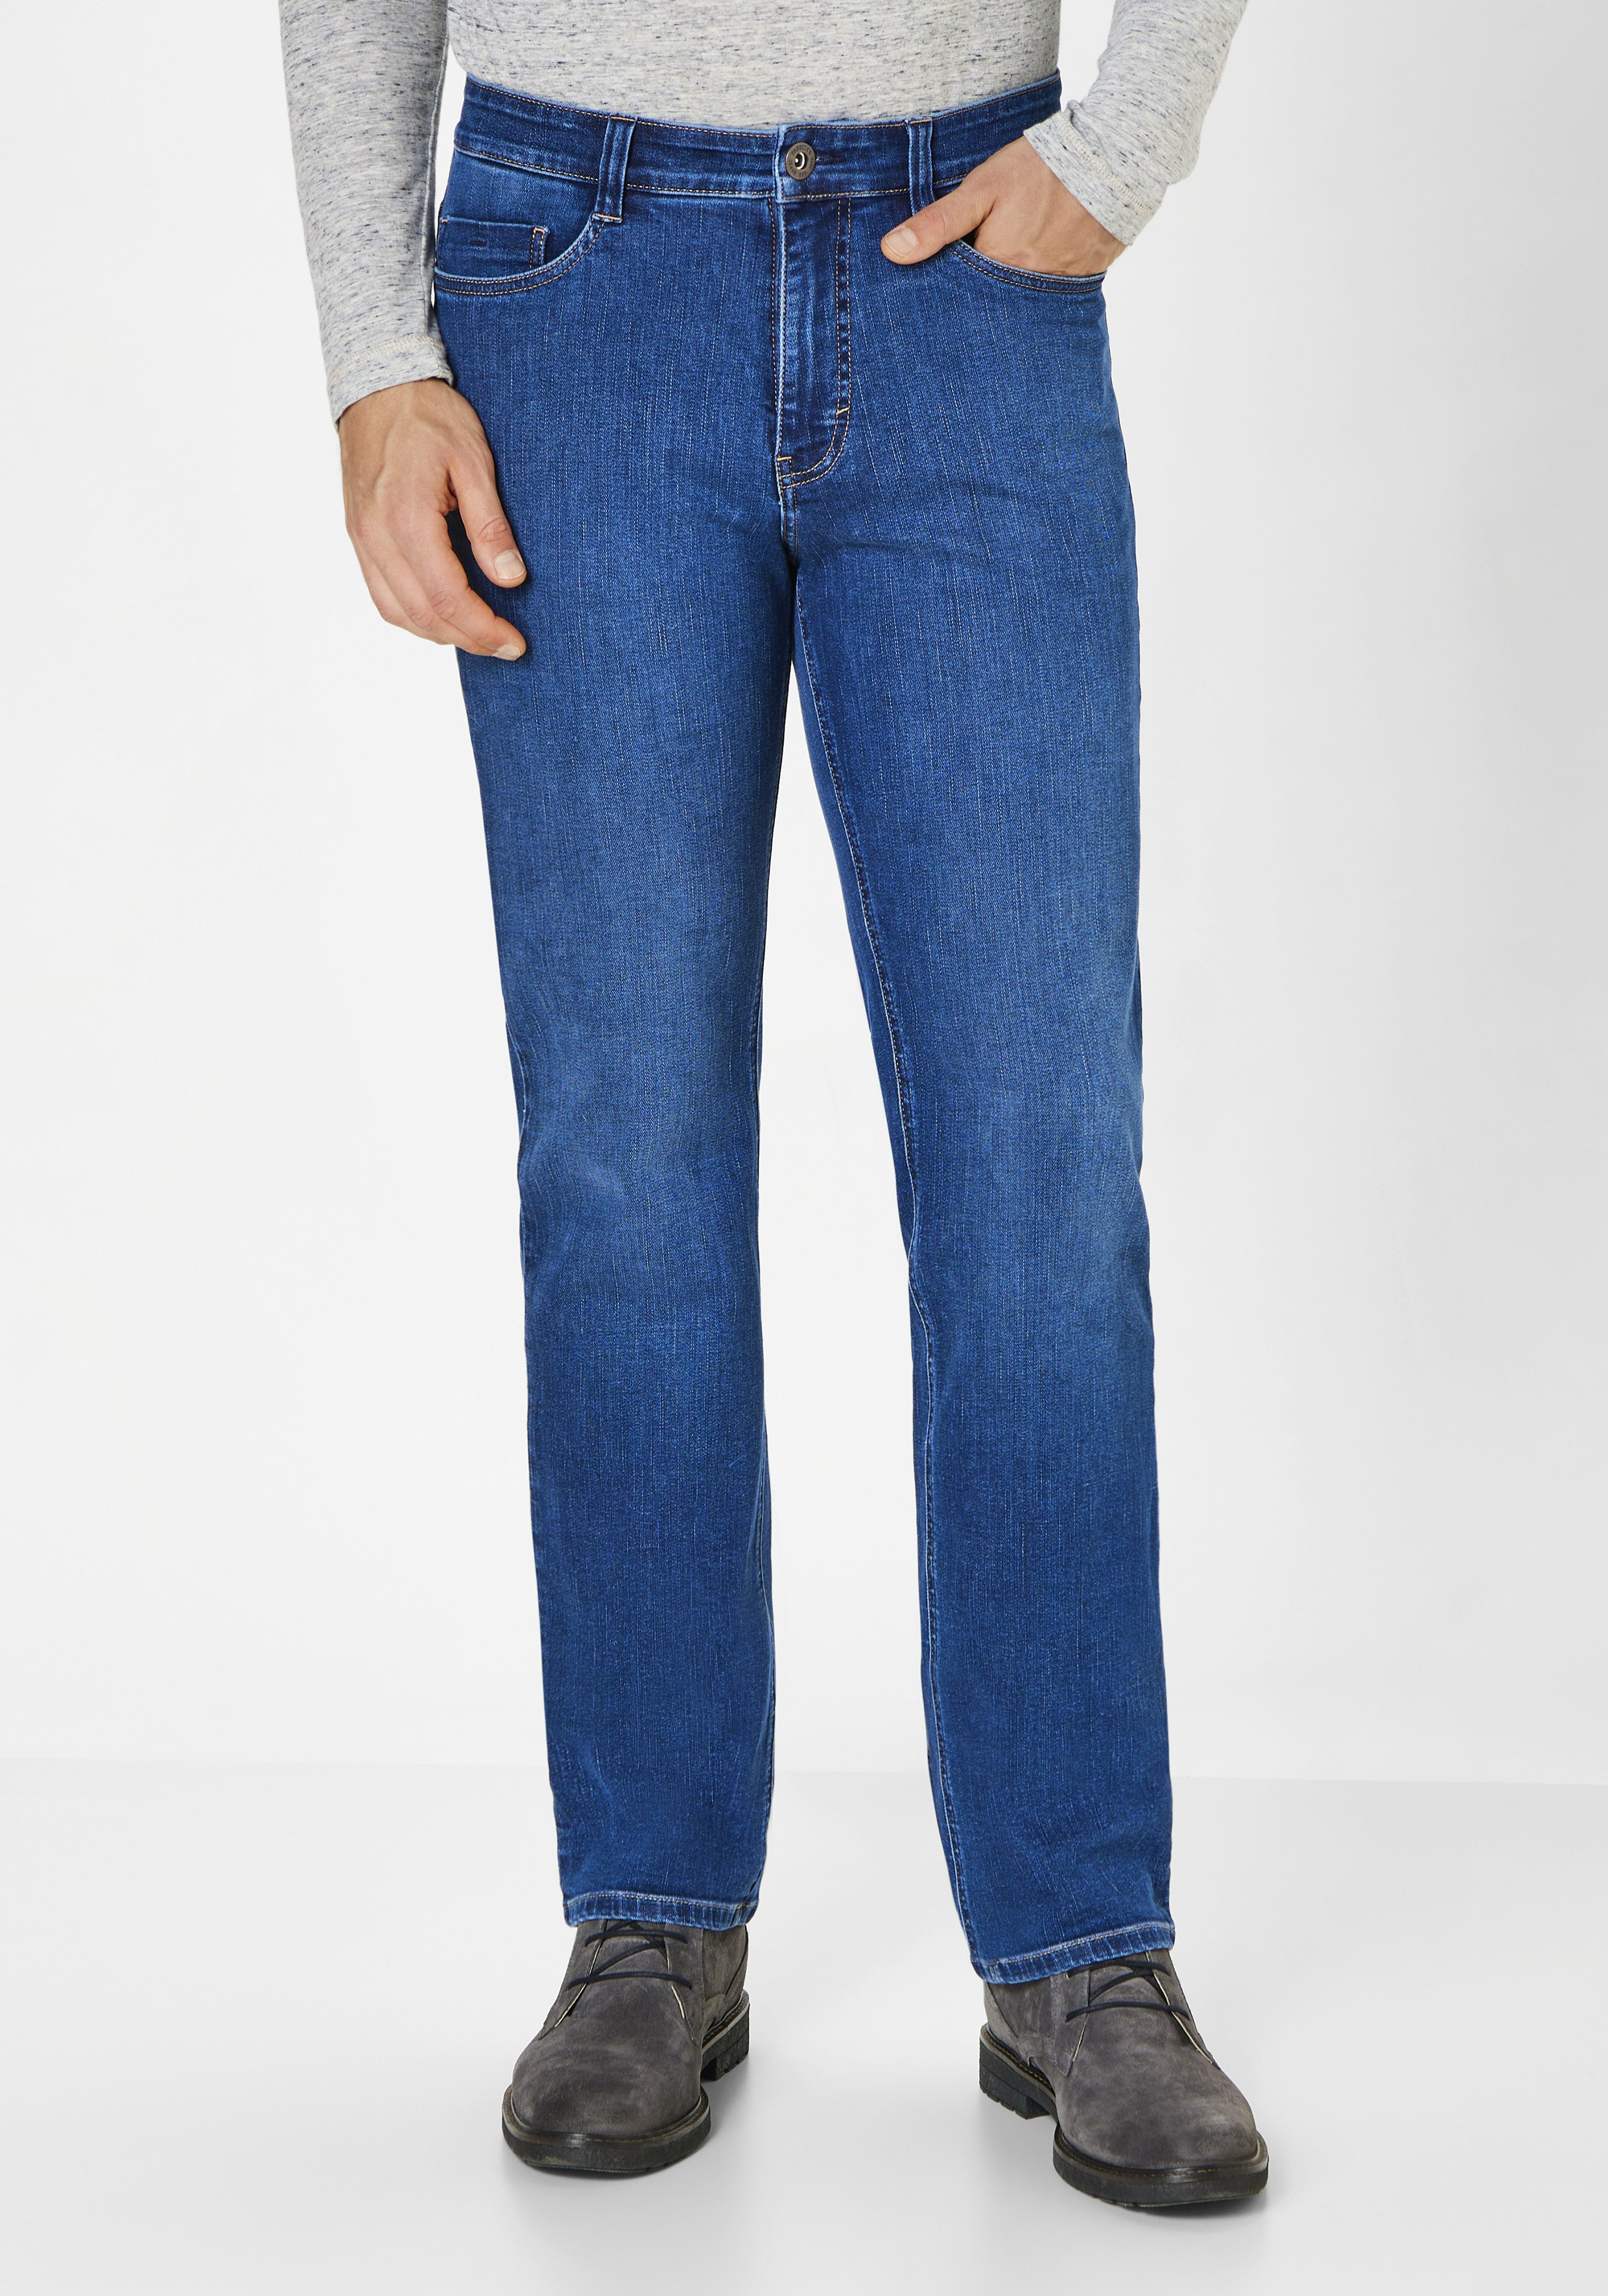 Paddock's Ranger Jeans Slim Fit blue/dark